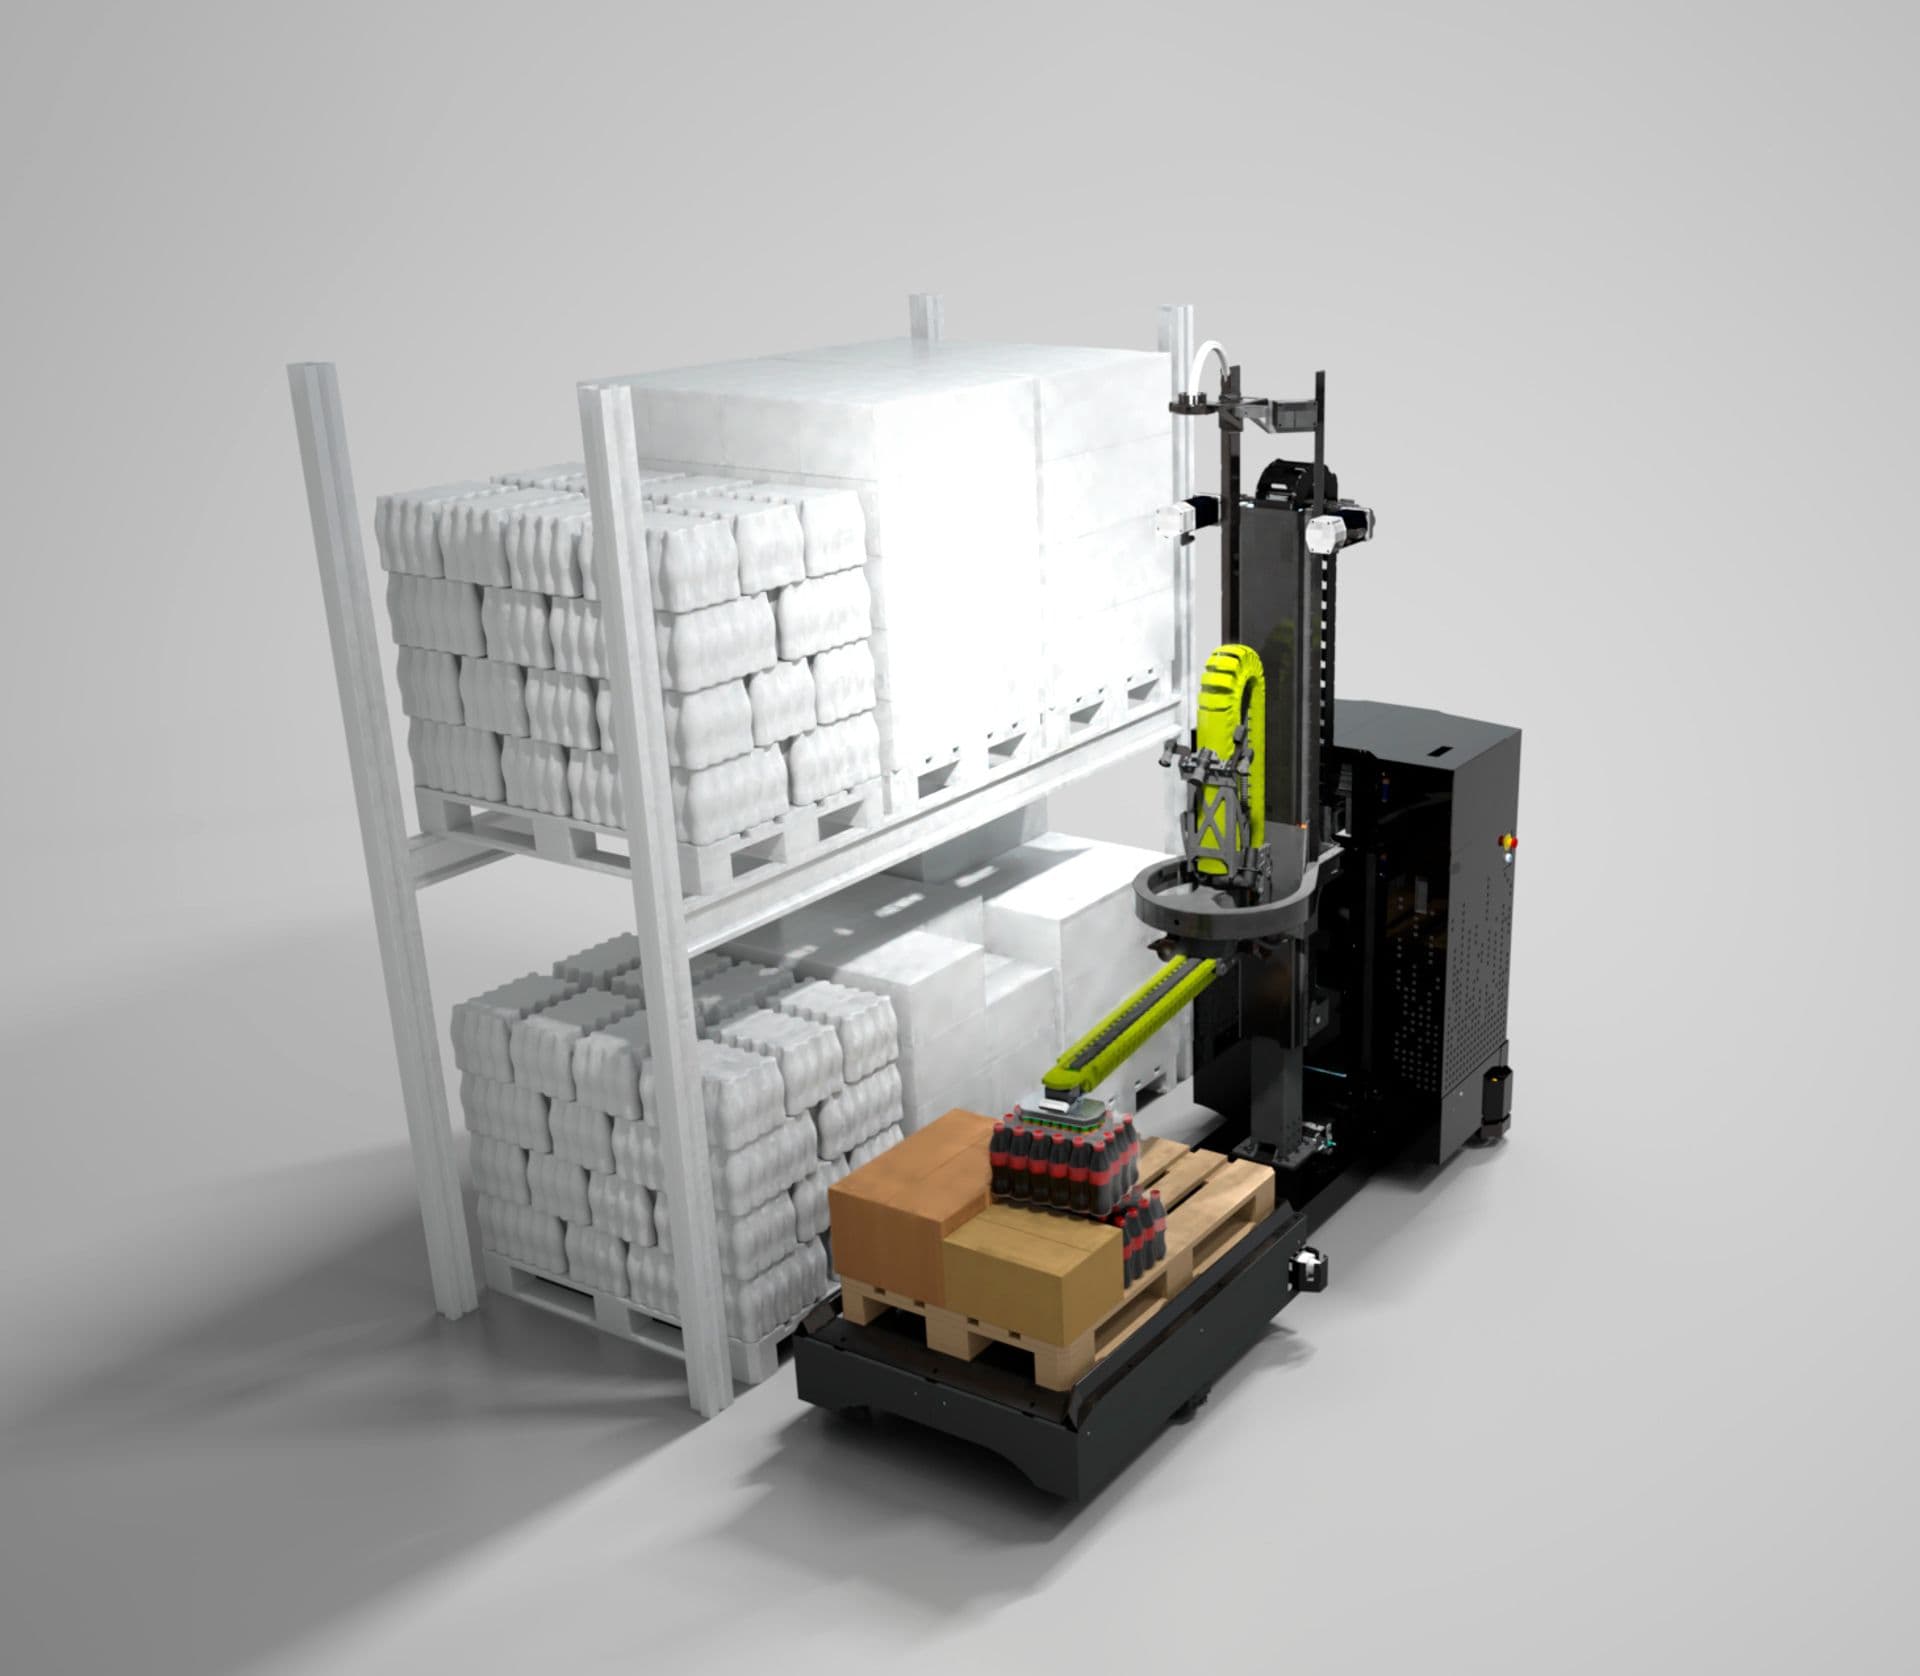 Illustrative image of Solwr's warehouse robot, "Grab"